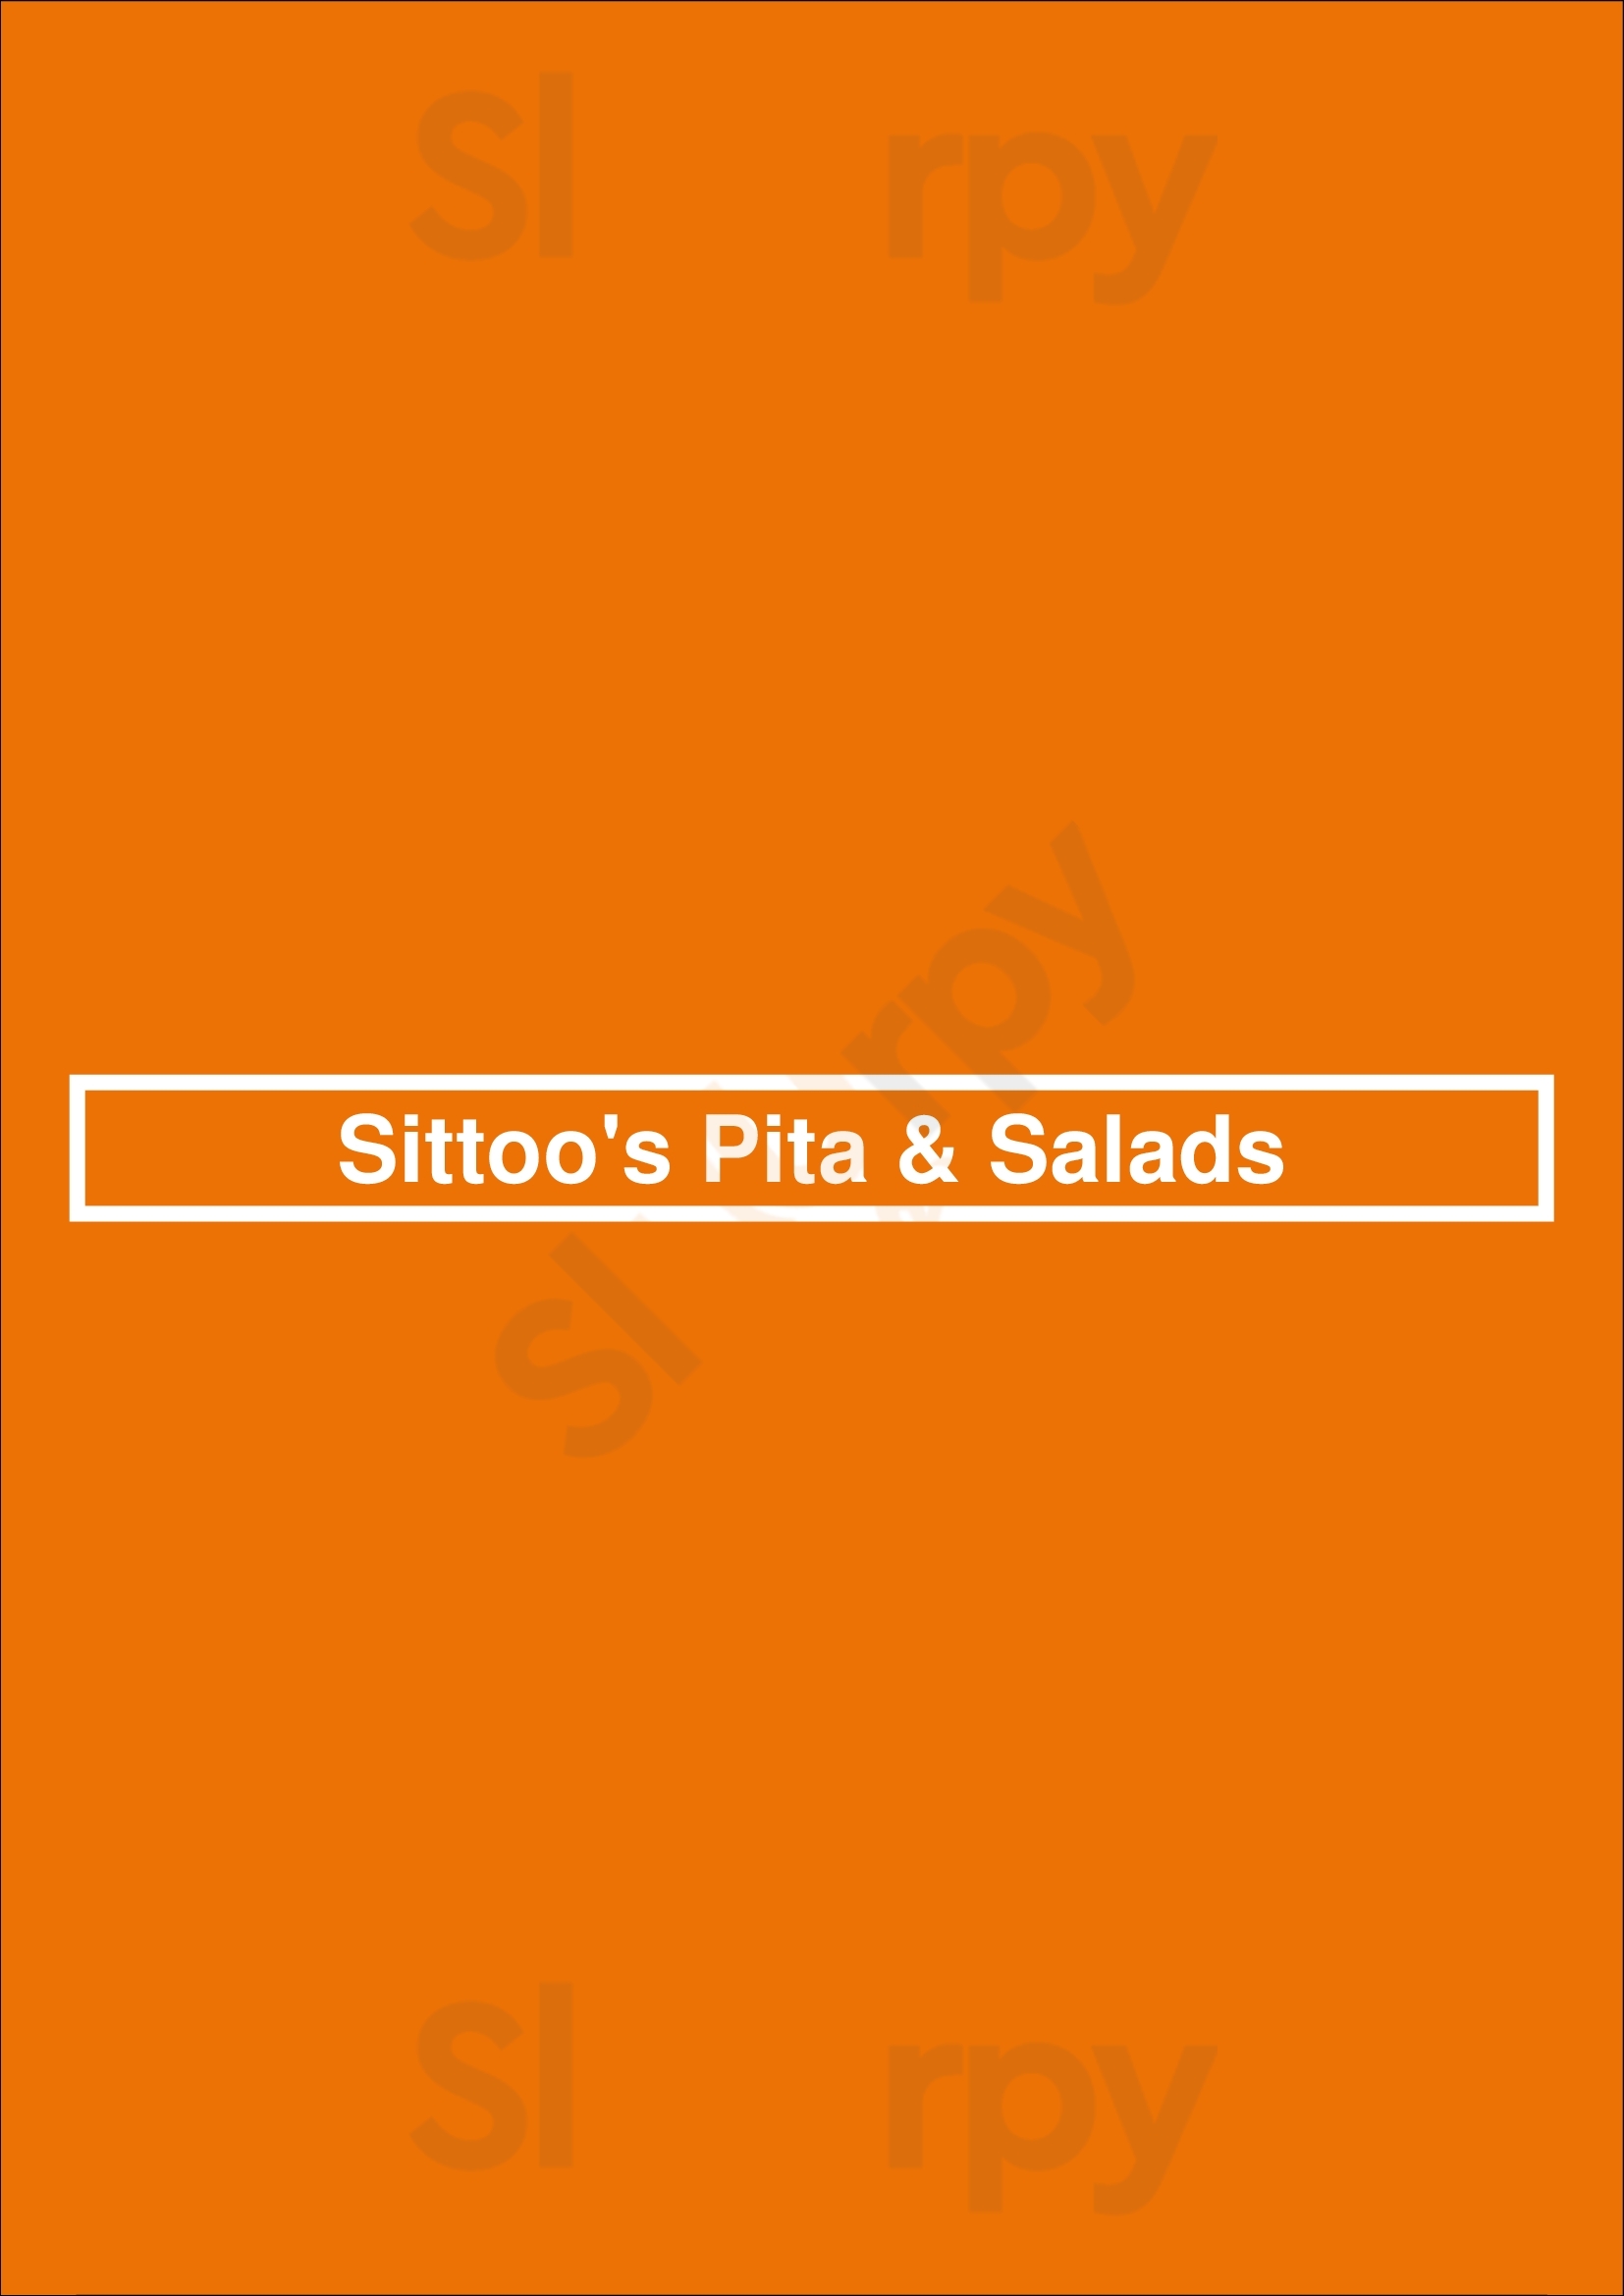 Sittoo's Pita & Salads Cleveland Menu - 1